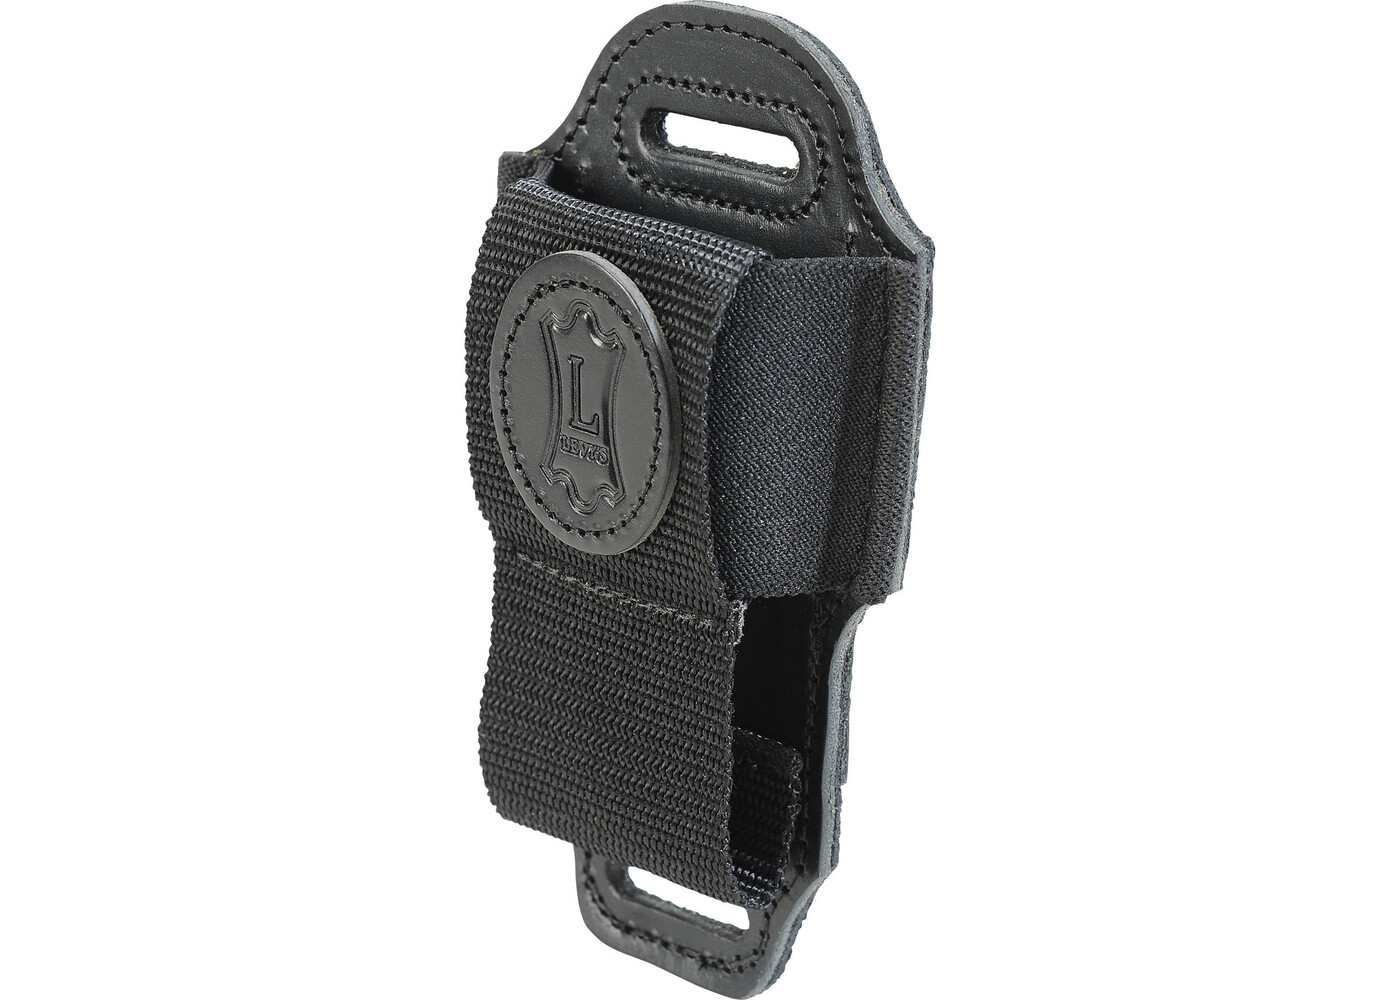 Levy's Levy's  Wireless Transmitter Bodypack Holder - Black Leather